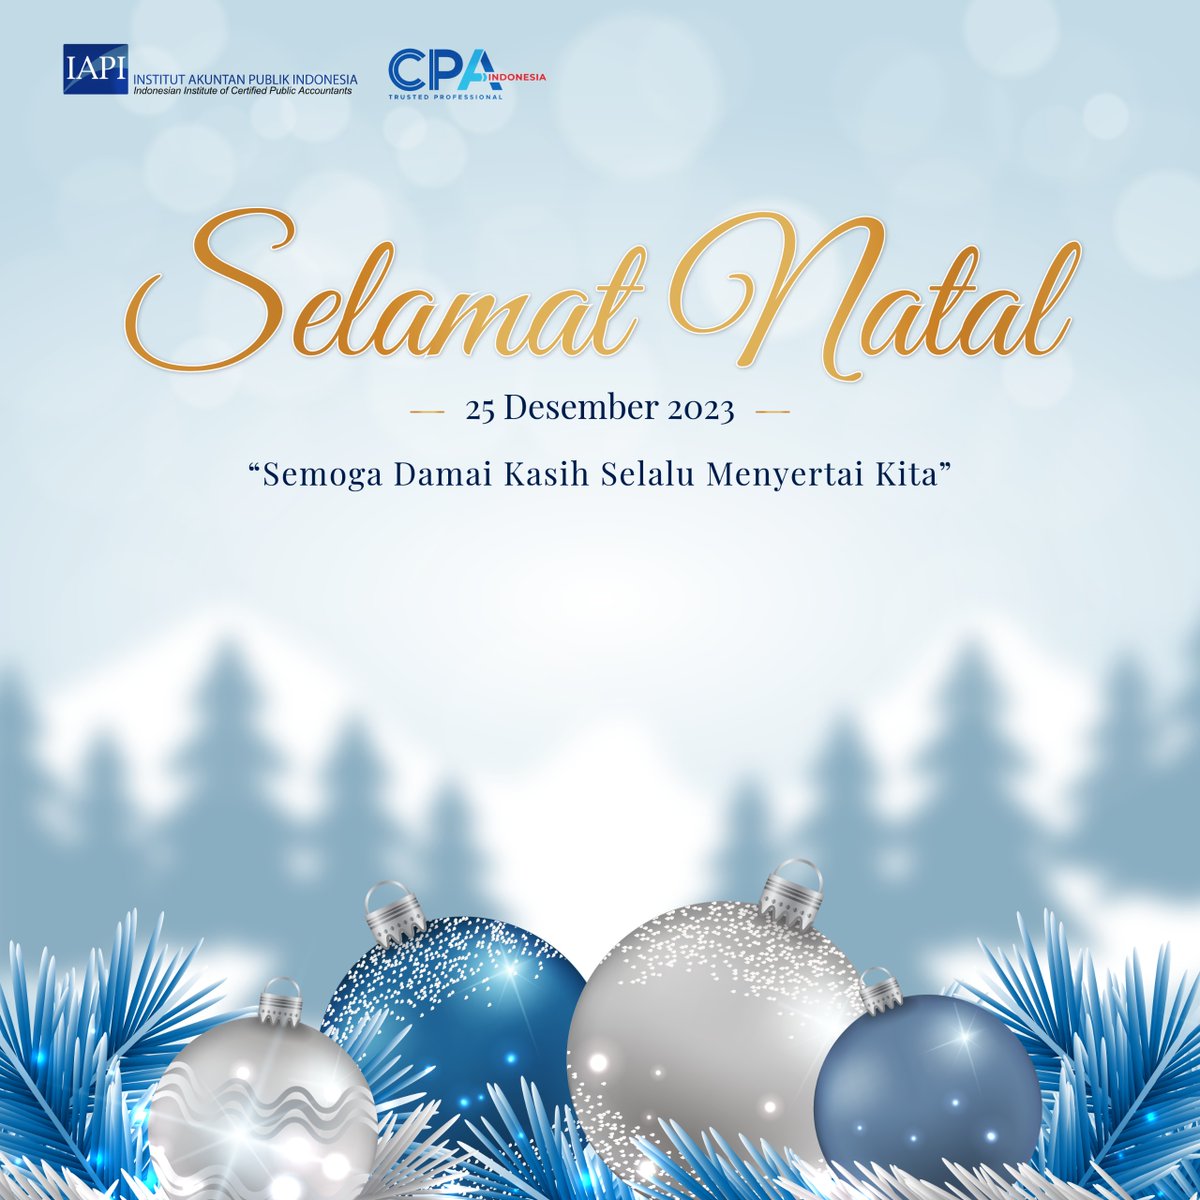 Selamat Natal 🎉 Semoga damai Natal membawa berkah dan kebahagiaan di setiap langkah perjalanan hidup kita. 🎉🎄 #selamatnatal #natal2023 #seasongreeting #InstitutAkuntanPublikIndonesia #CPAIndonesia